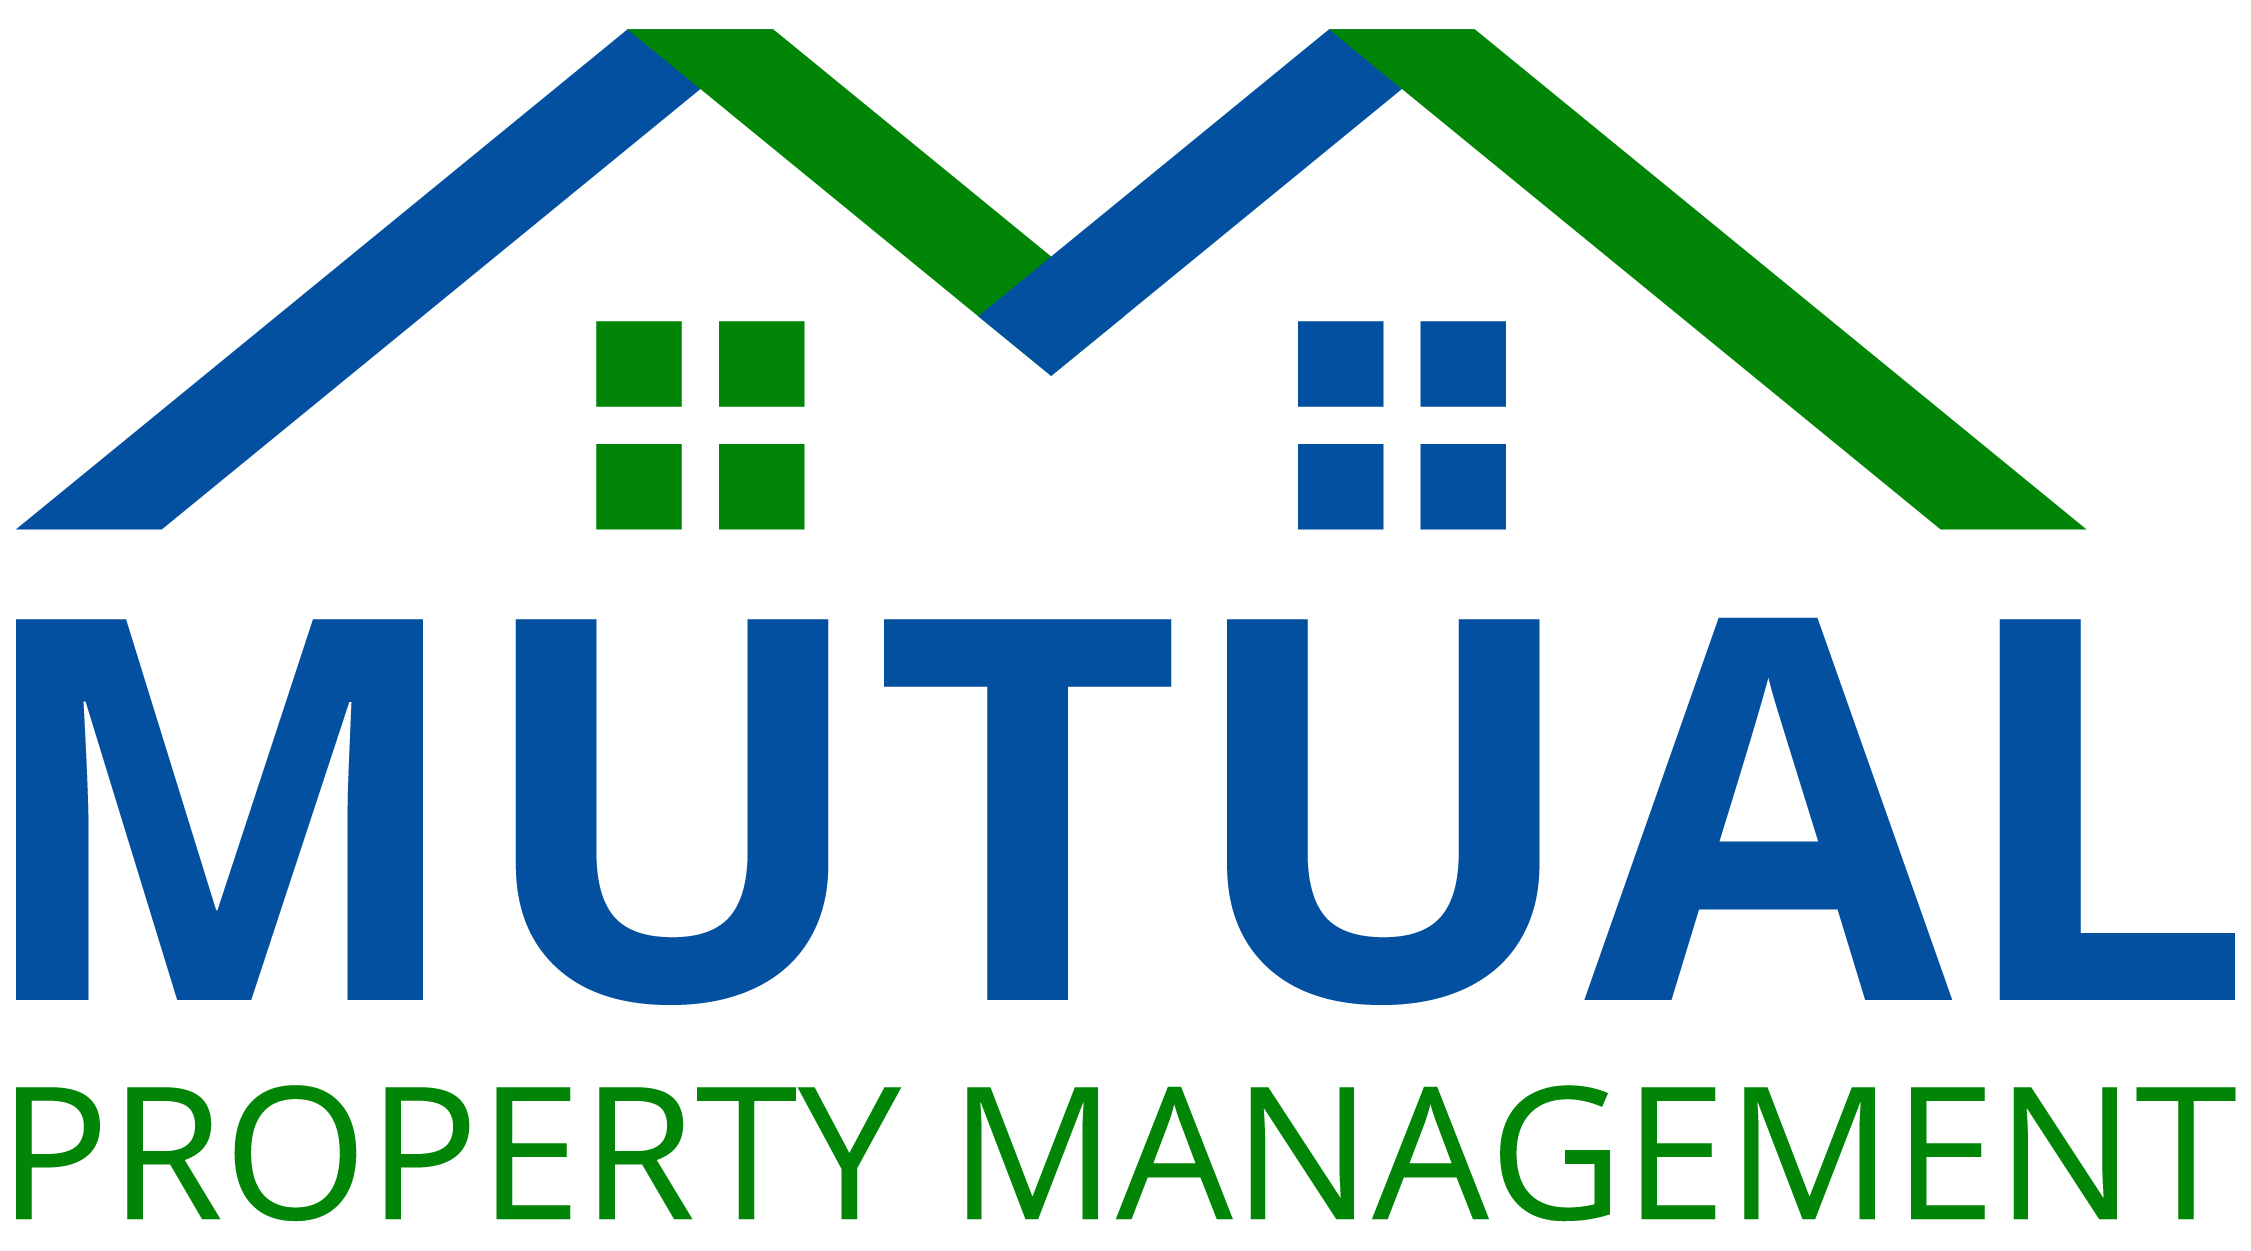 Mutual Property Management logo